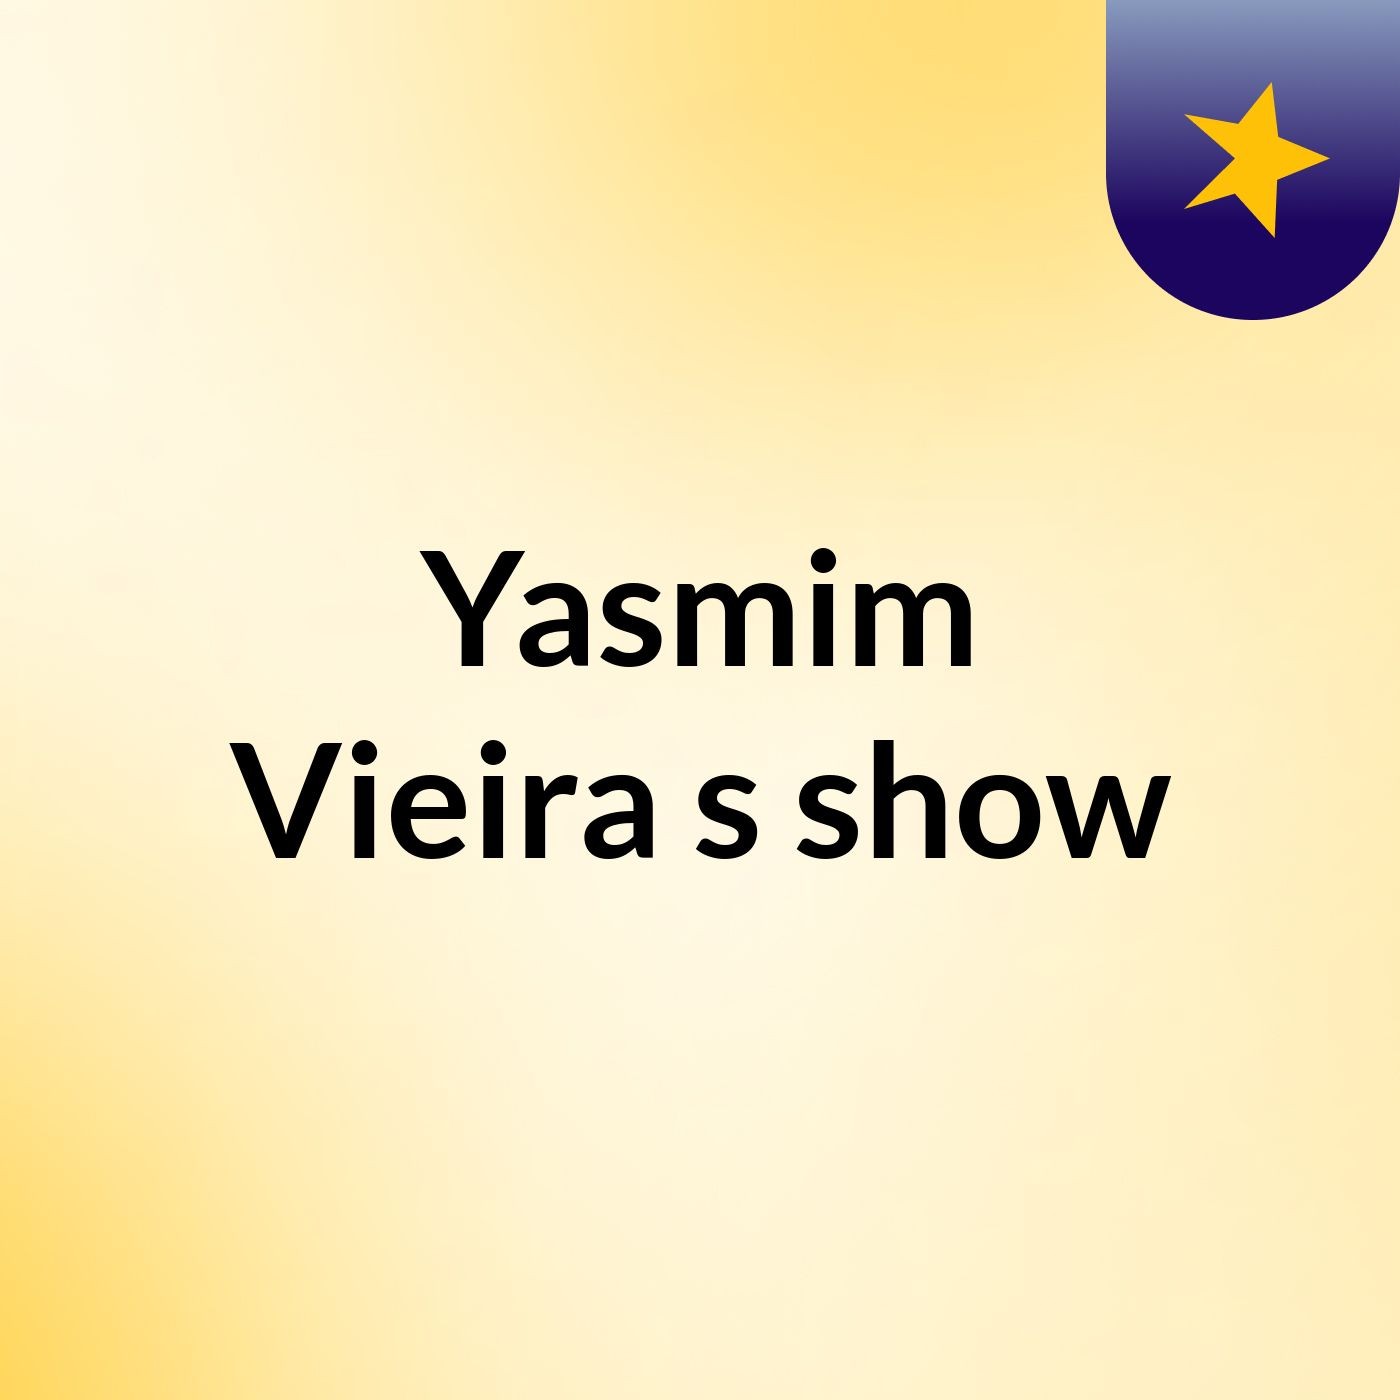 Yasmim Vieira's show